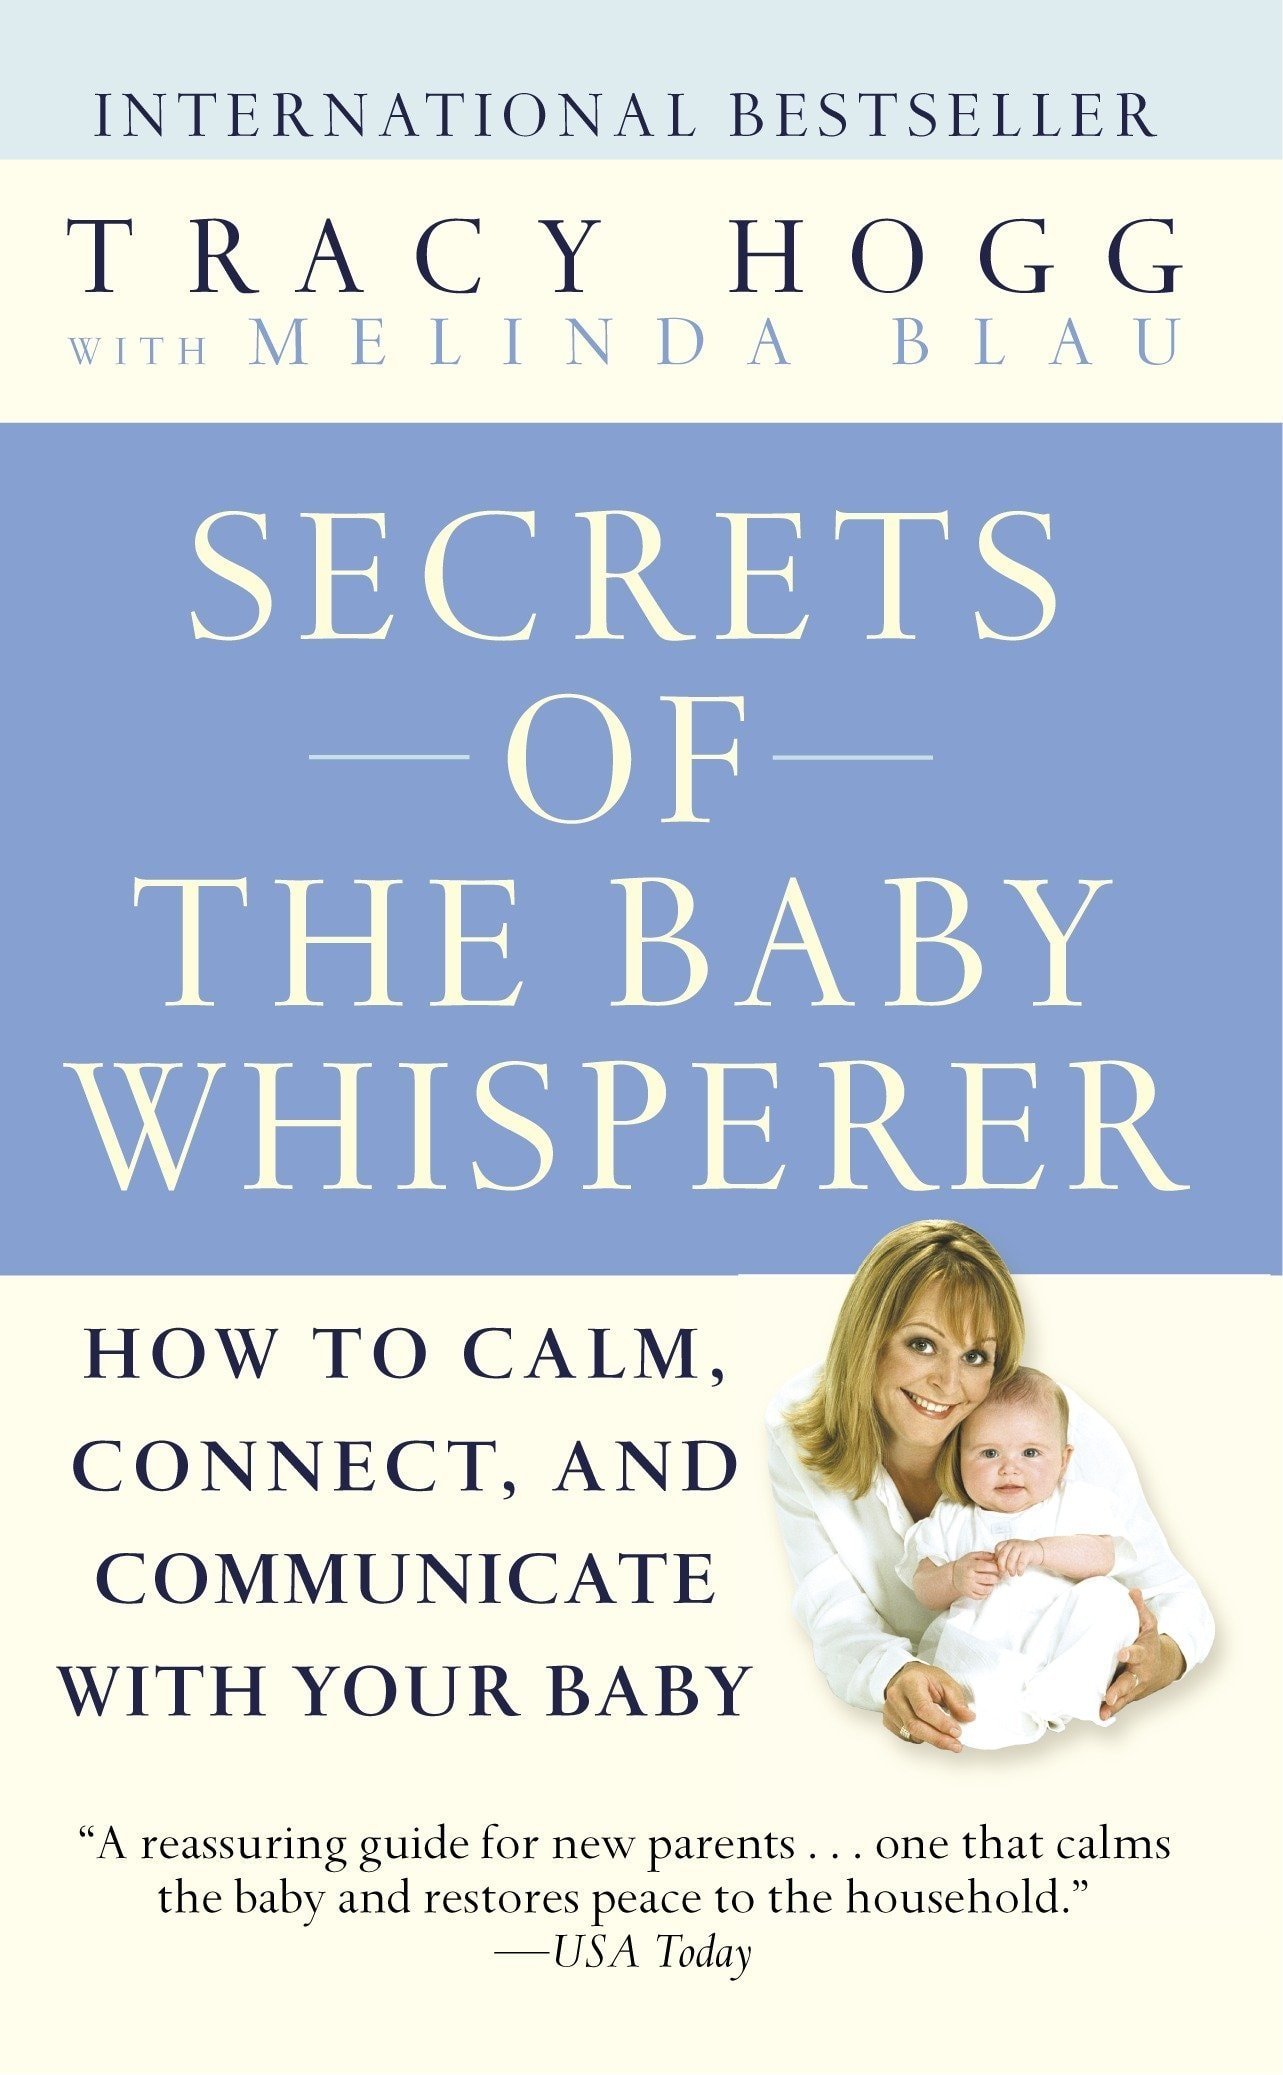 "Secrets of the Baby Whisperer" by Tracy Hogg and Melinda Blau